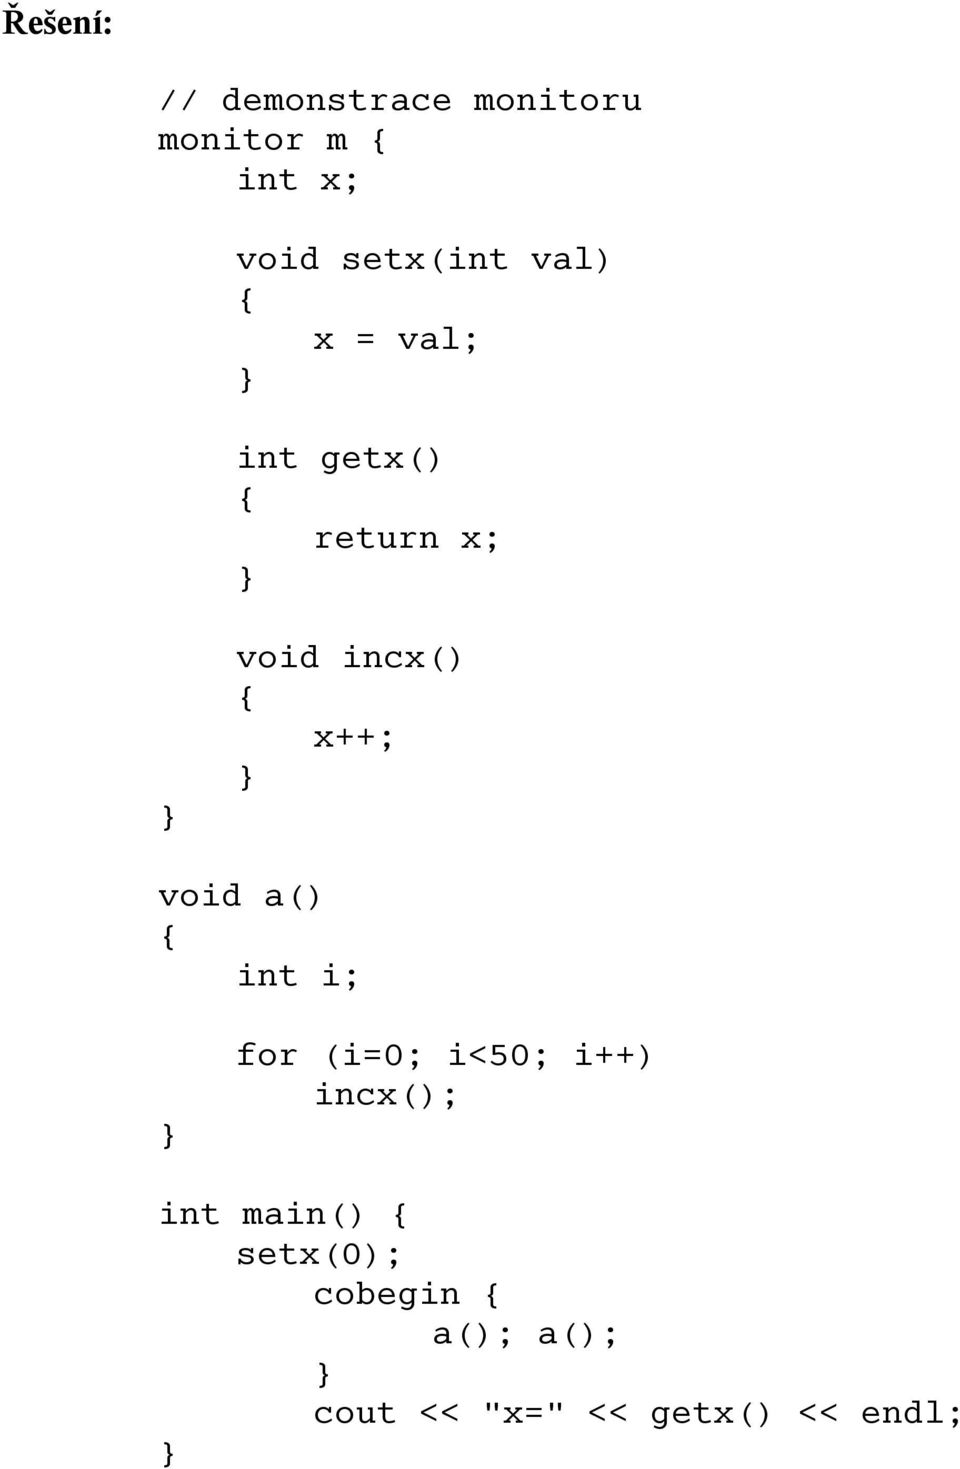 { x++; void a() { int i; for (i=0; i<50; i++) incx(); int